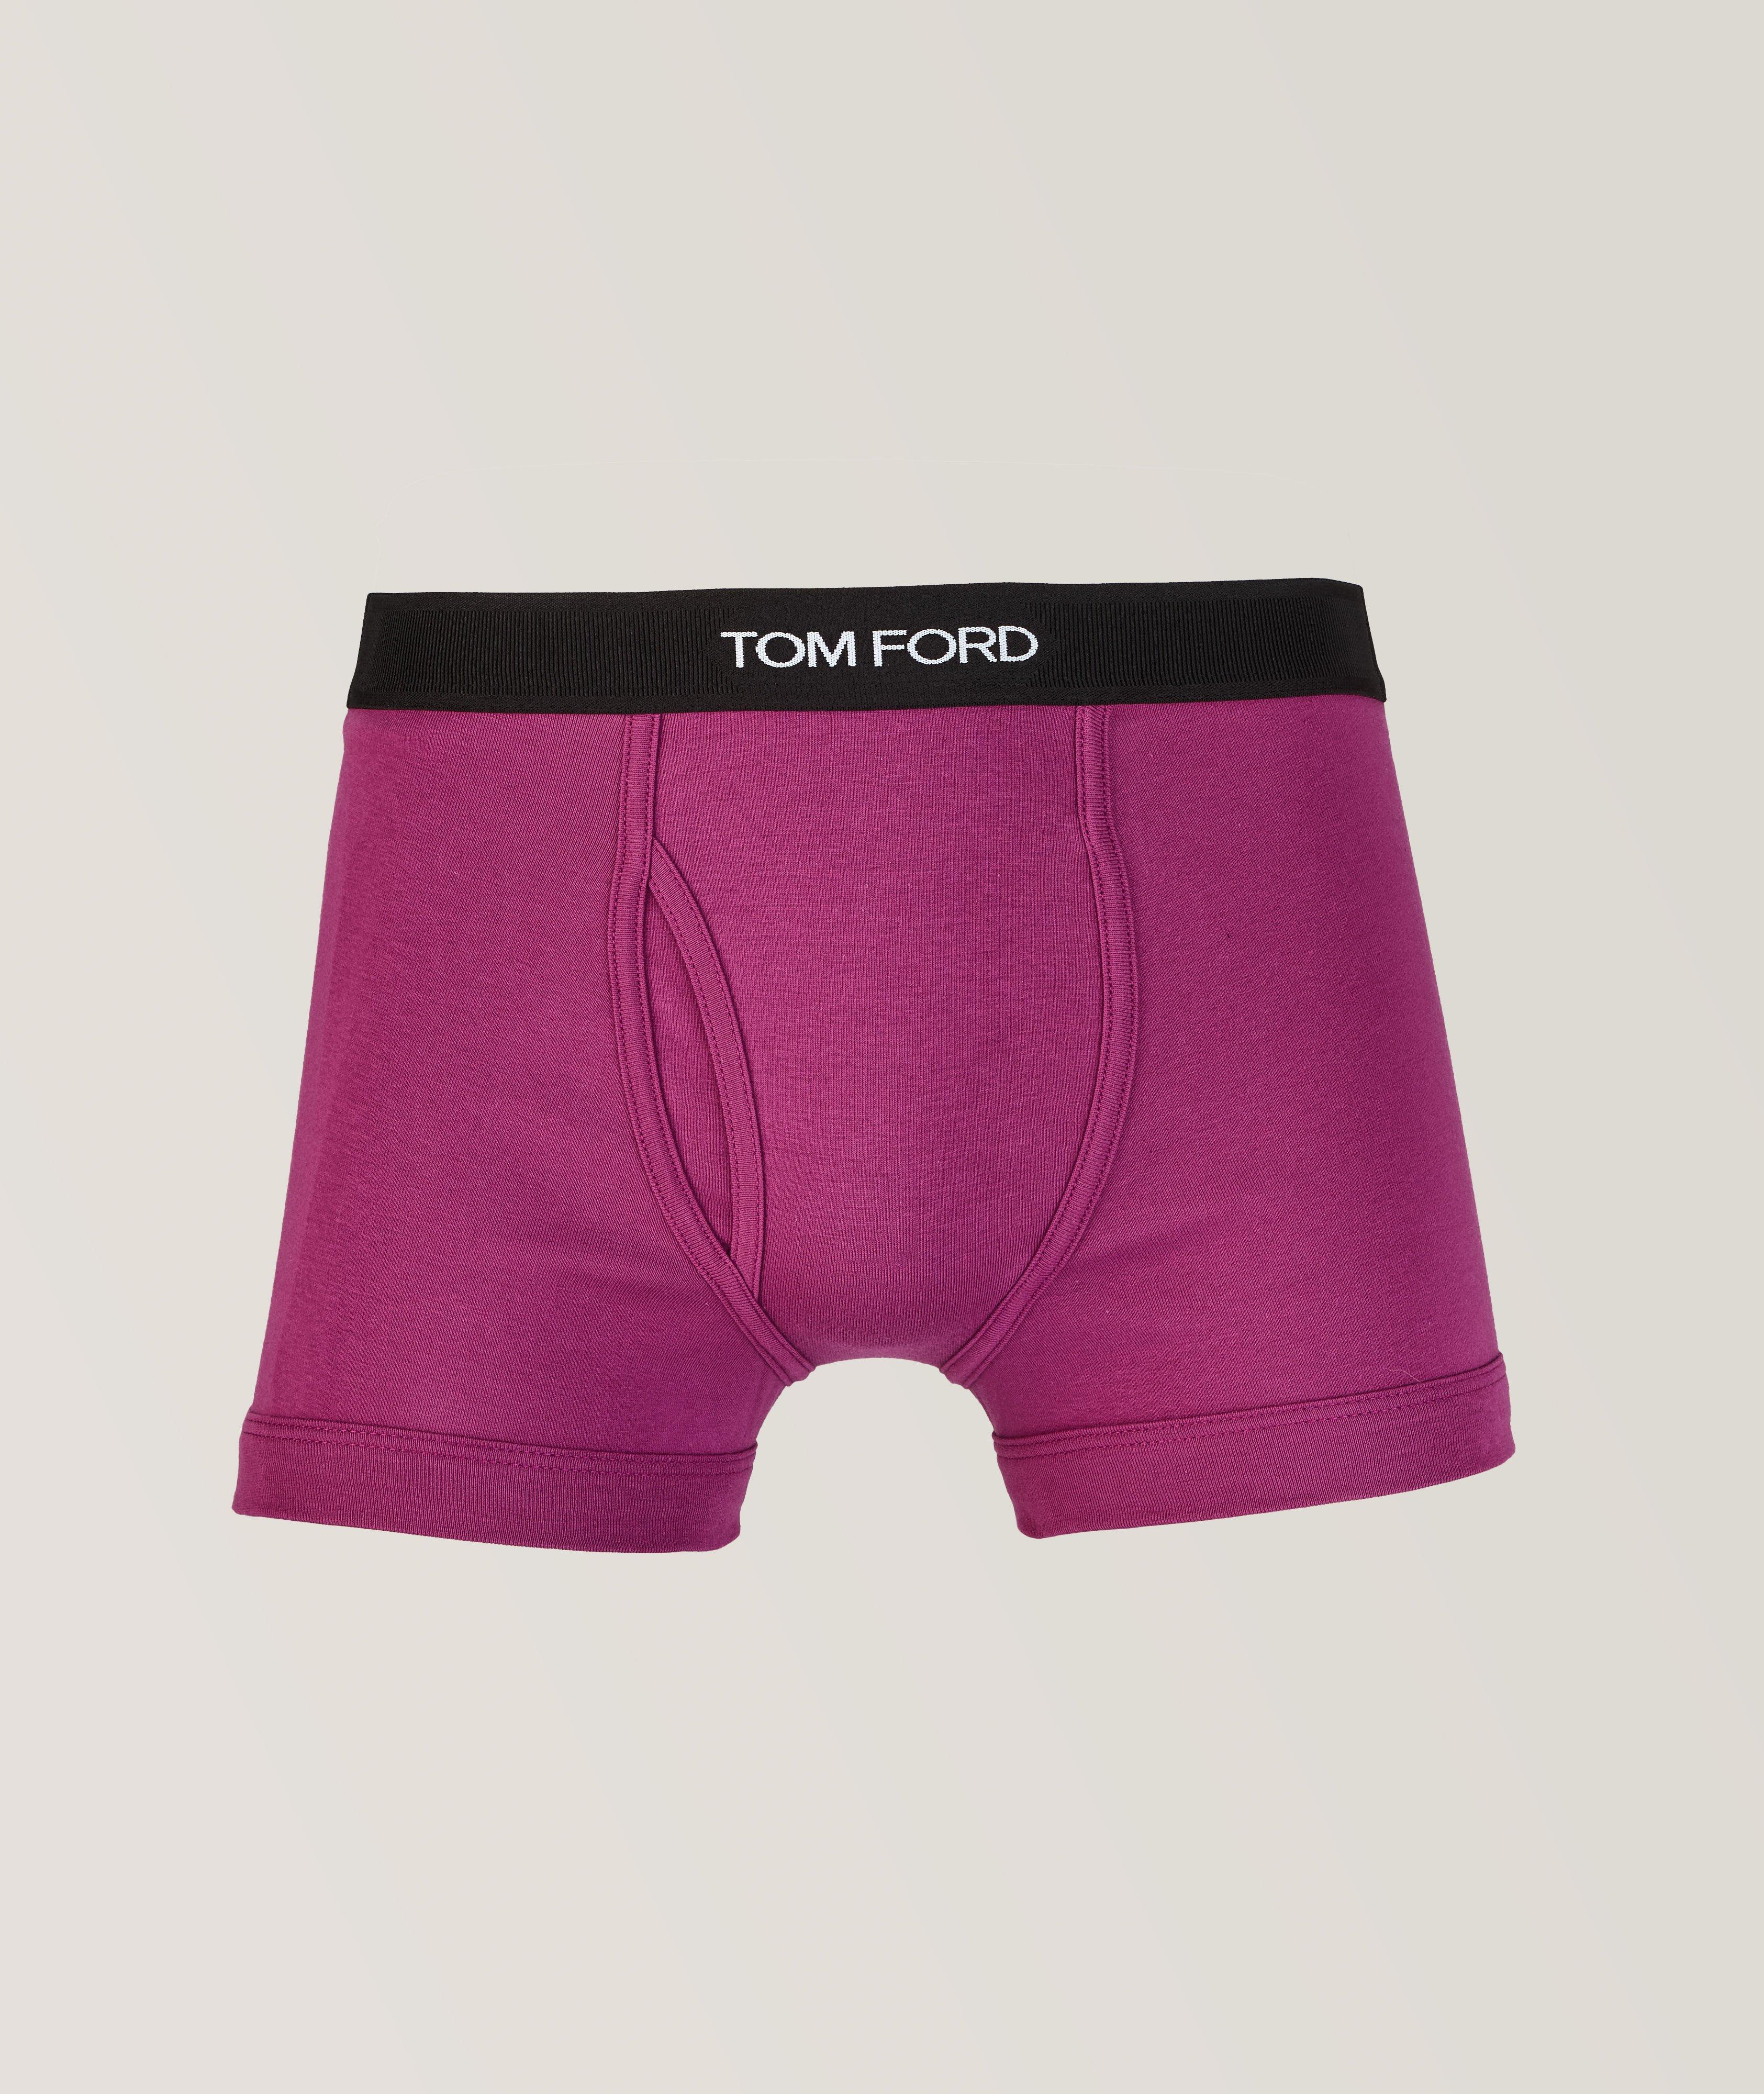 Hanas 2024 Underwear Mens Funny Briefs Underwear Sports Breathable Soft  Briefs Gag Gifts for Men Valentines Day Multi-Color Xl 